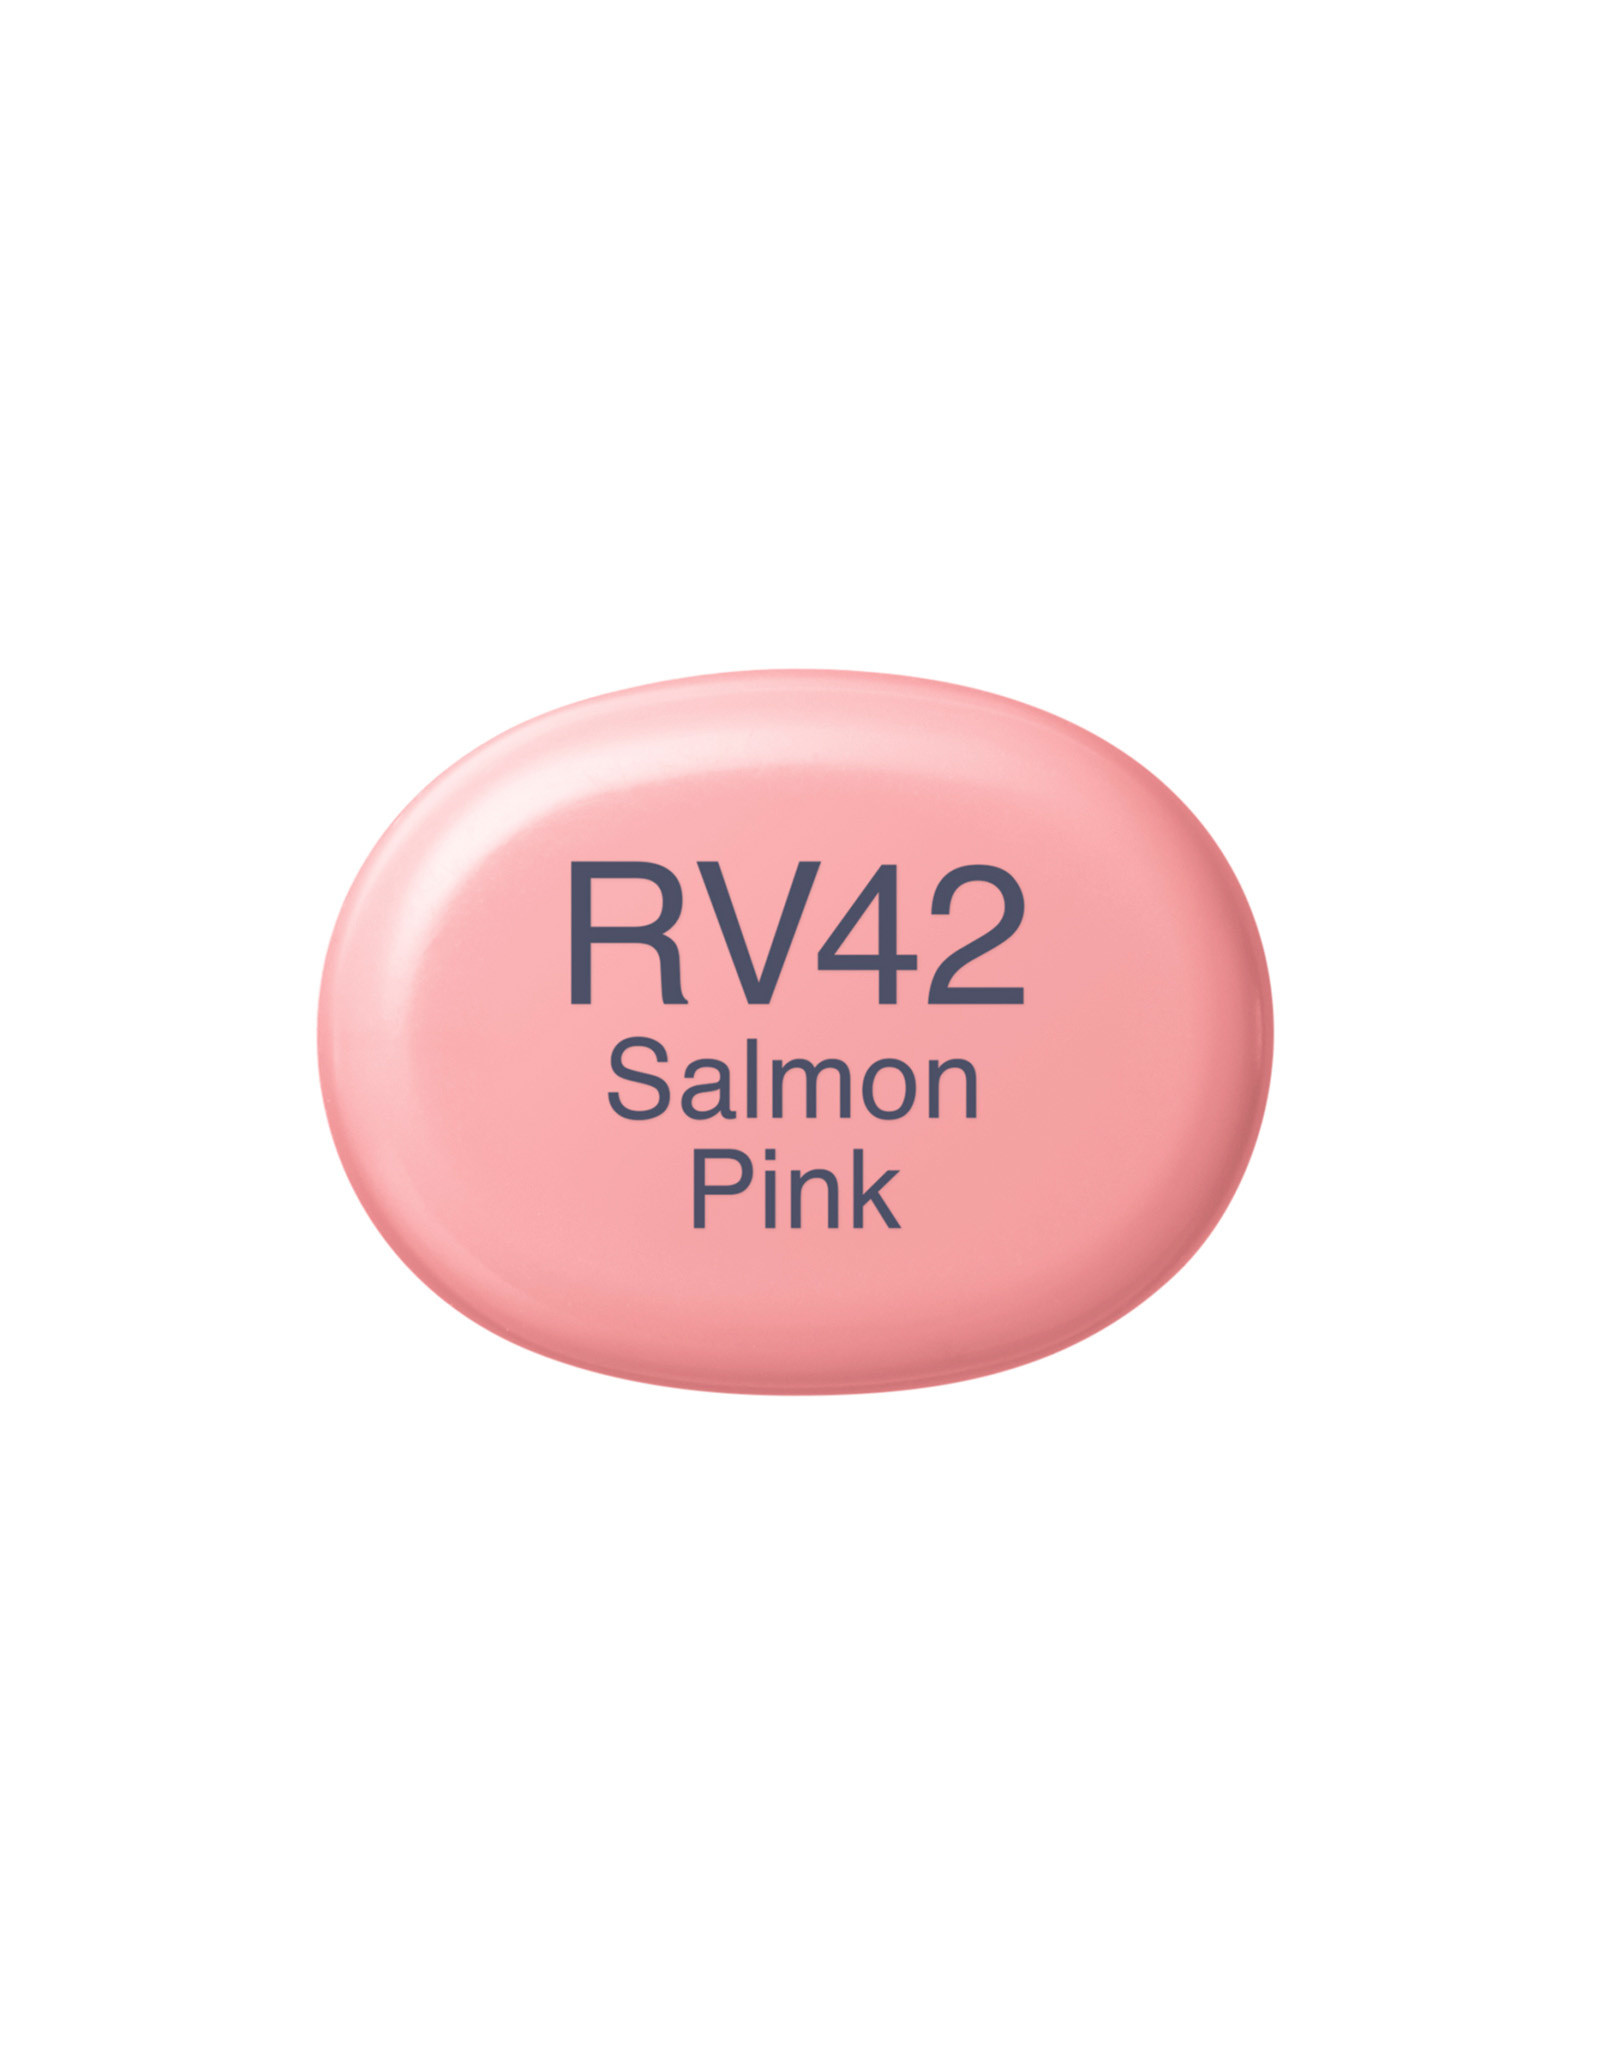 COPIC COPIC Sketch Marker RV42 Salmon Pink